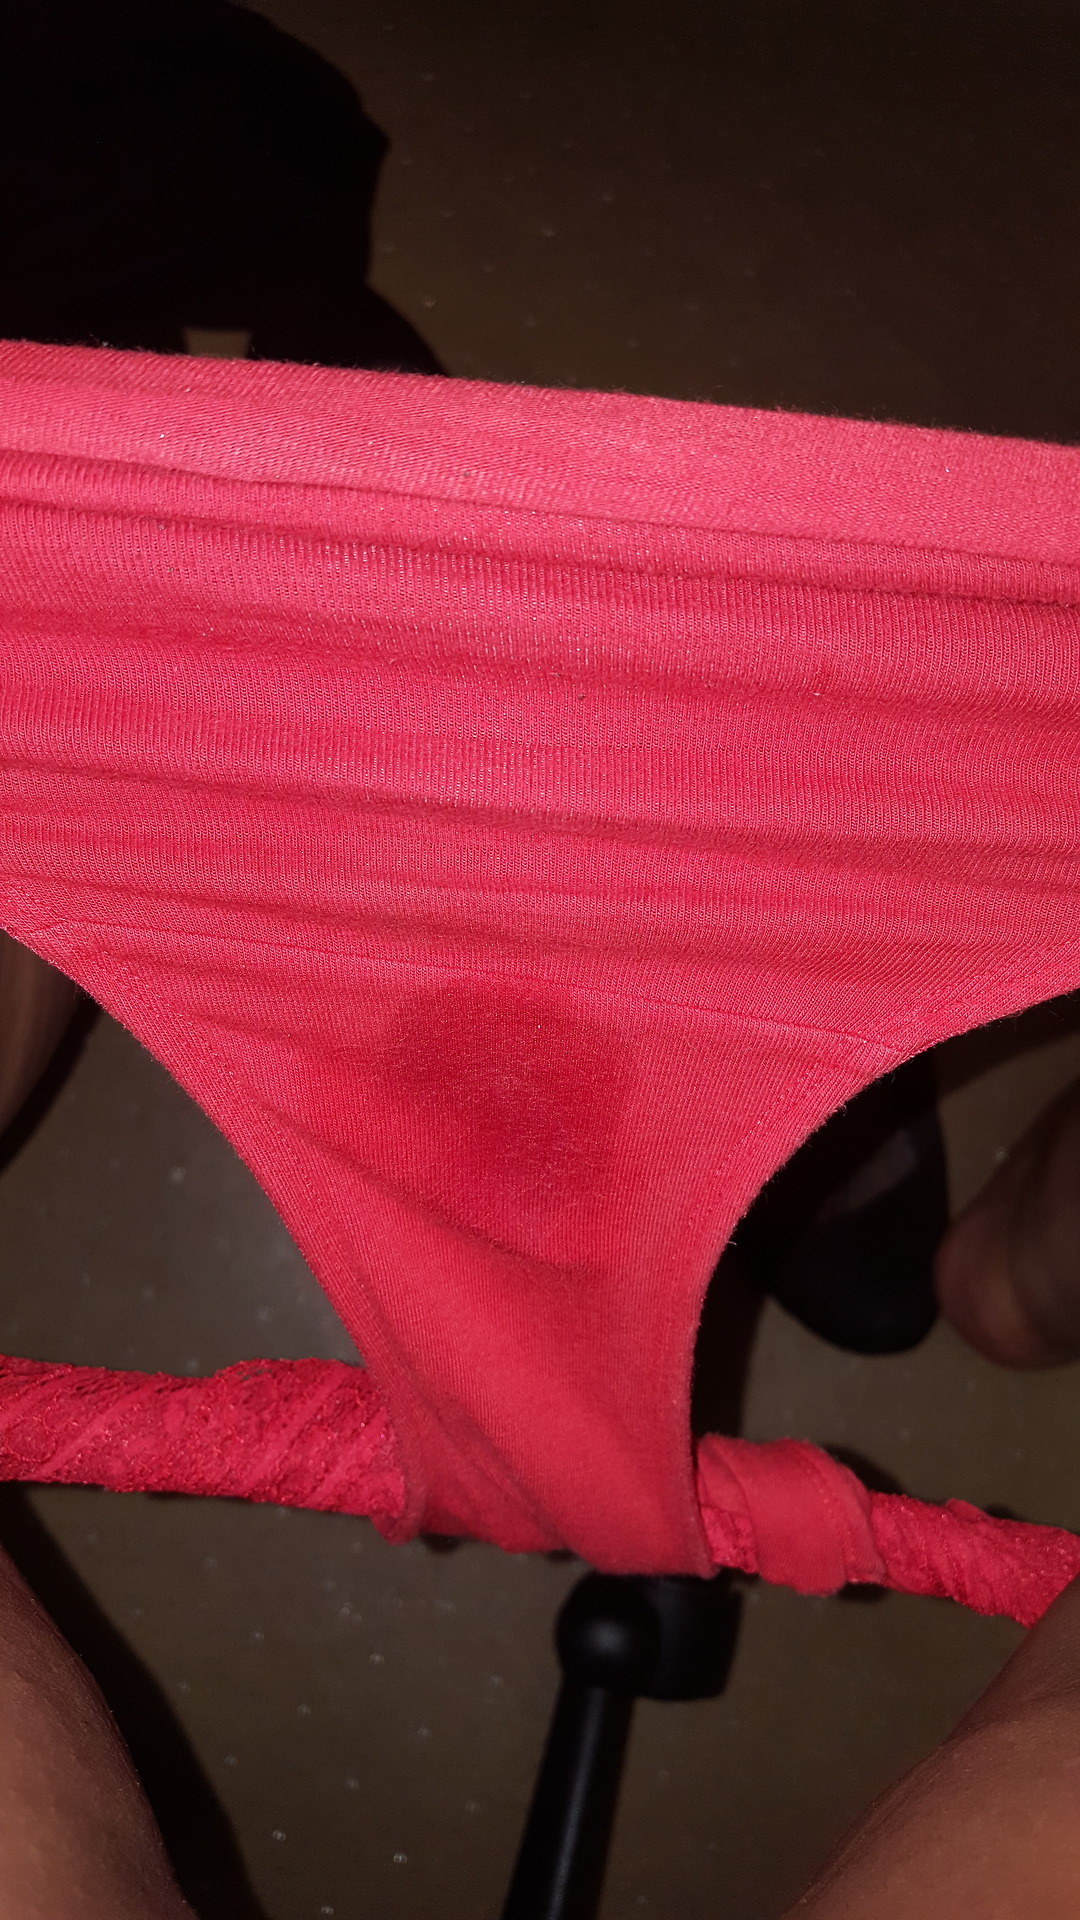 bbwlatina-love:  Panties were starting to get wet at work so I need to play